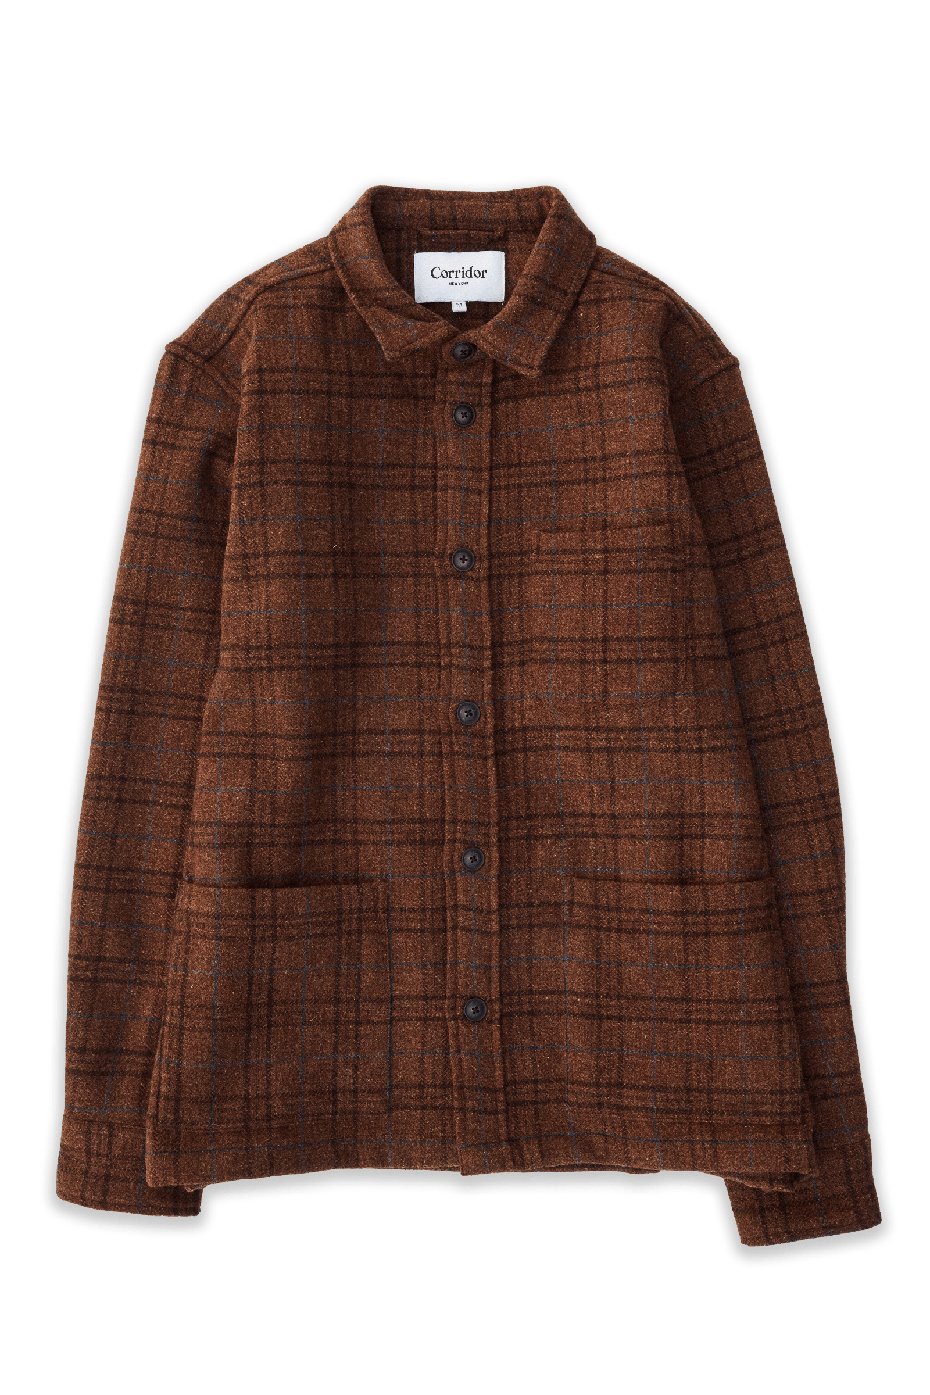 Corridor Brown Plaid Shetland Wool Jacket